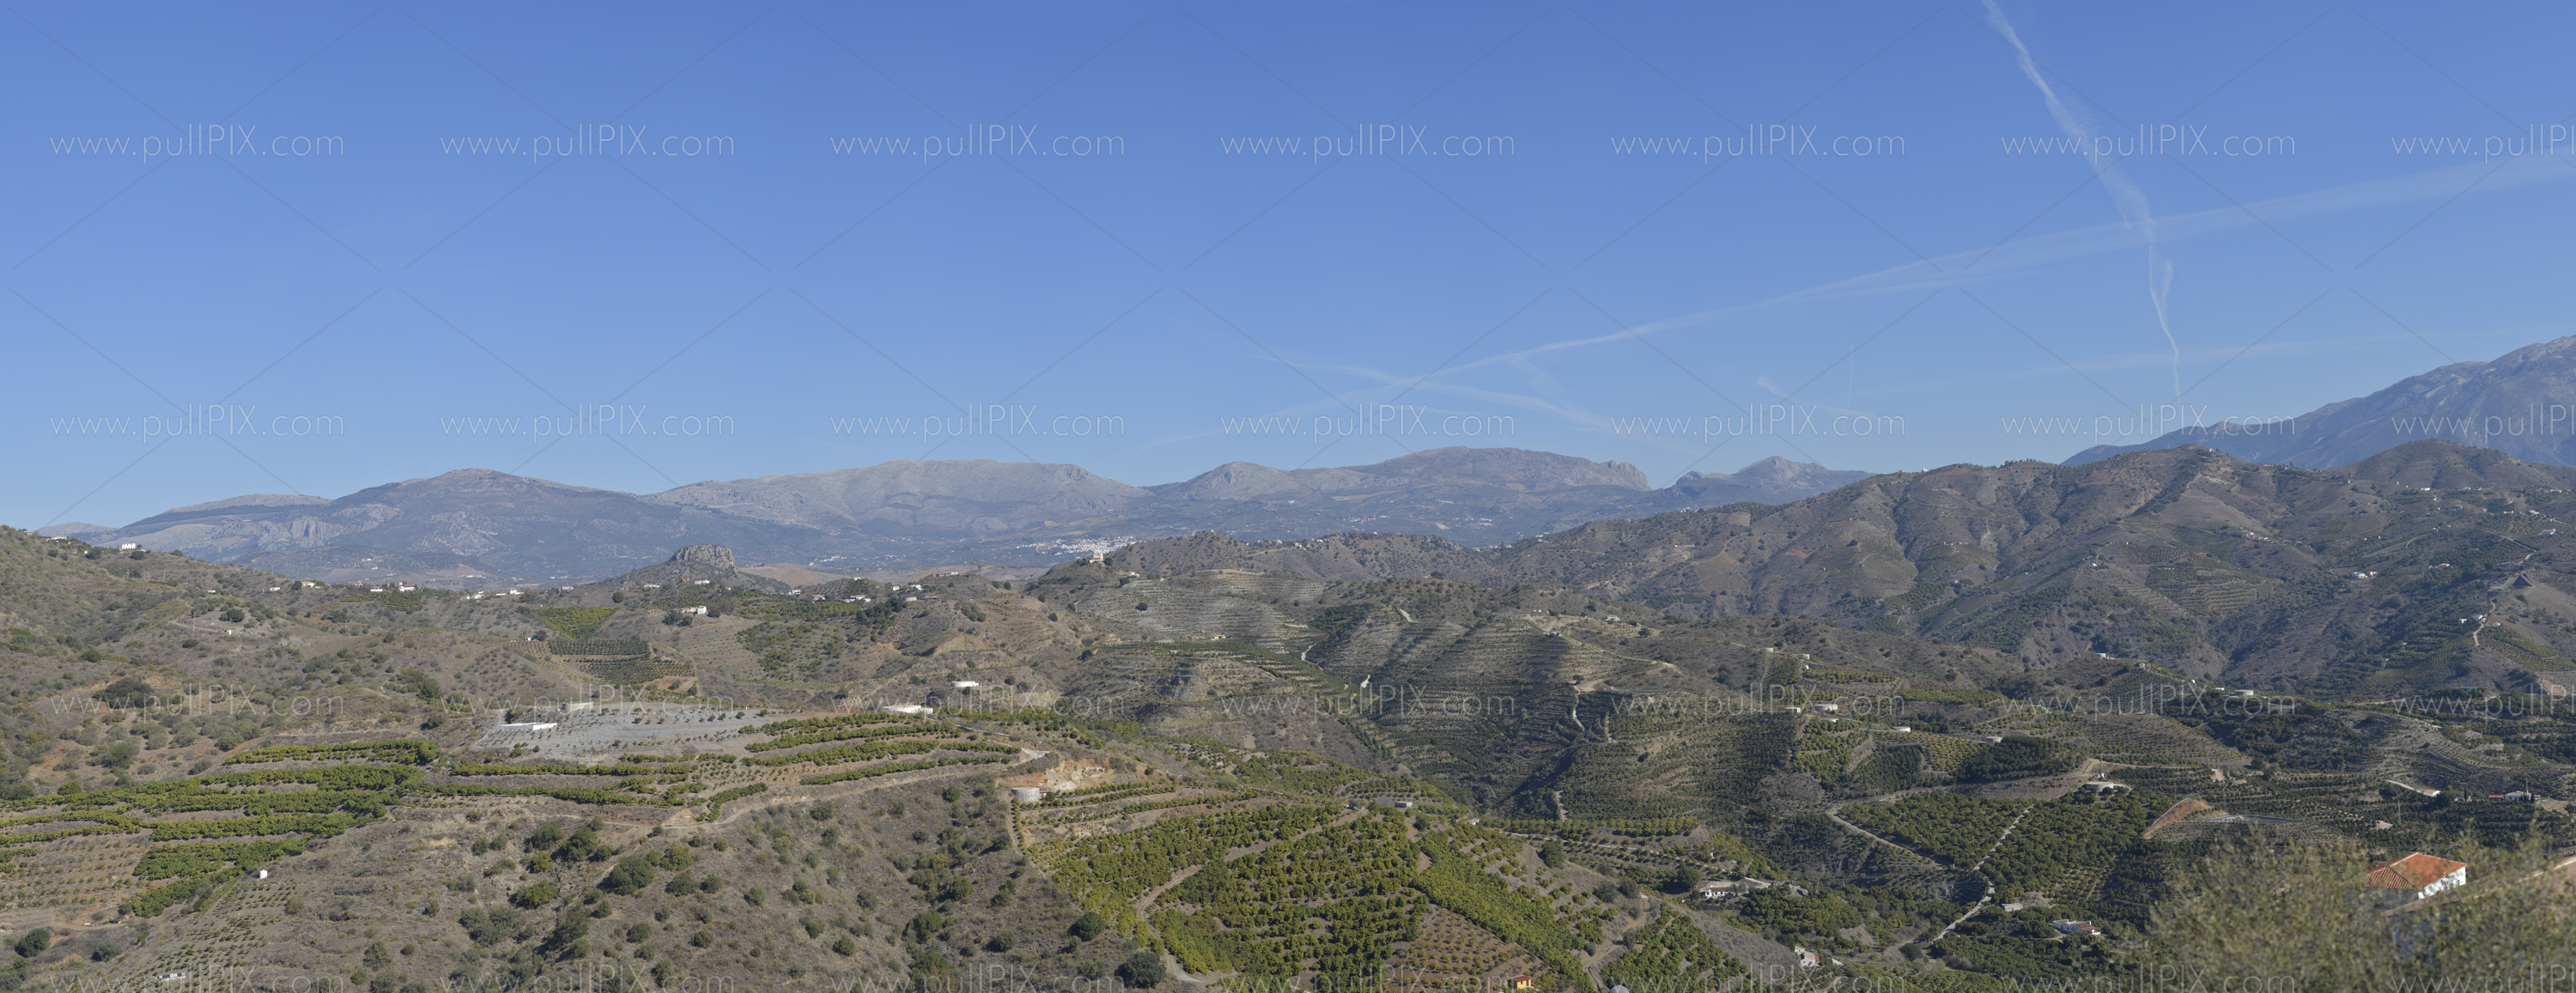 Preview andalusische landschaft.jpg